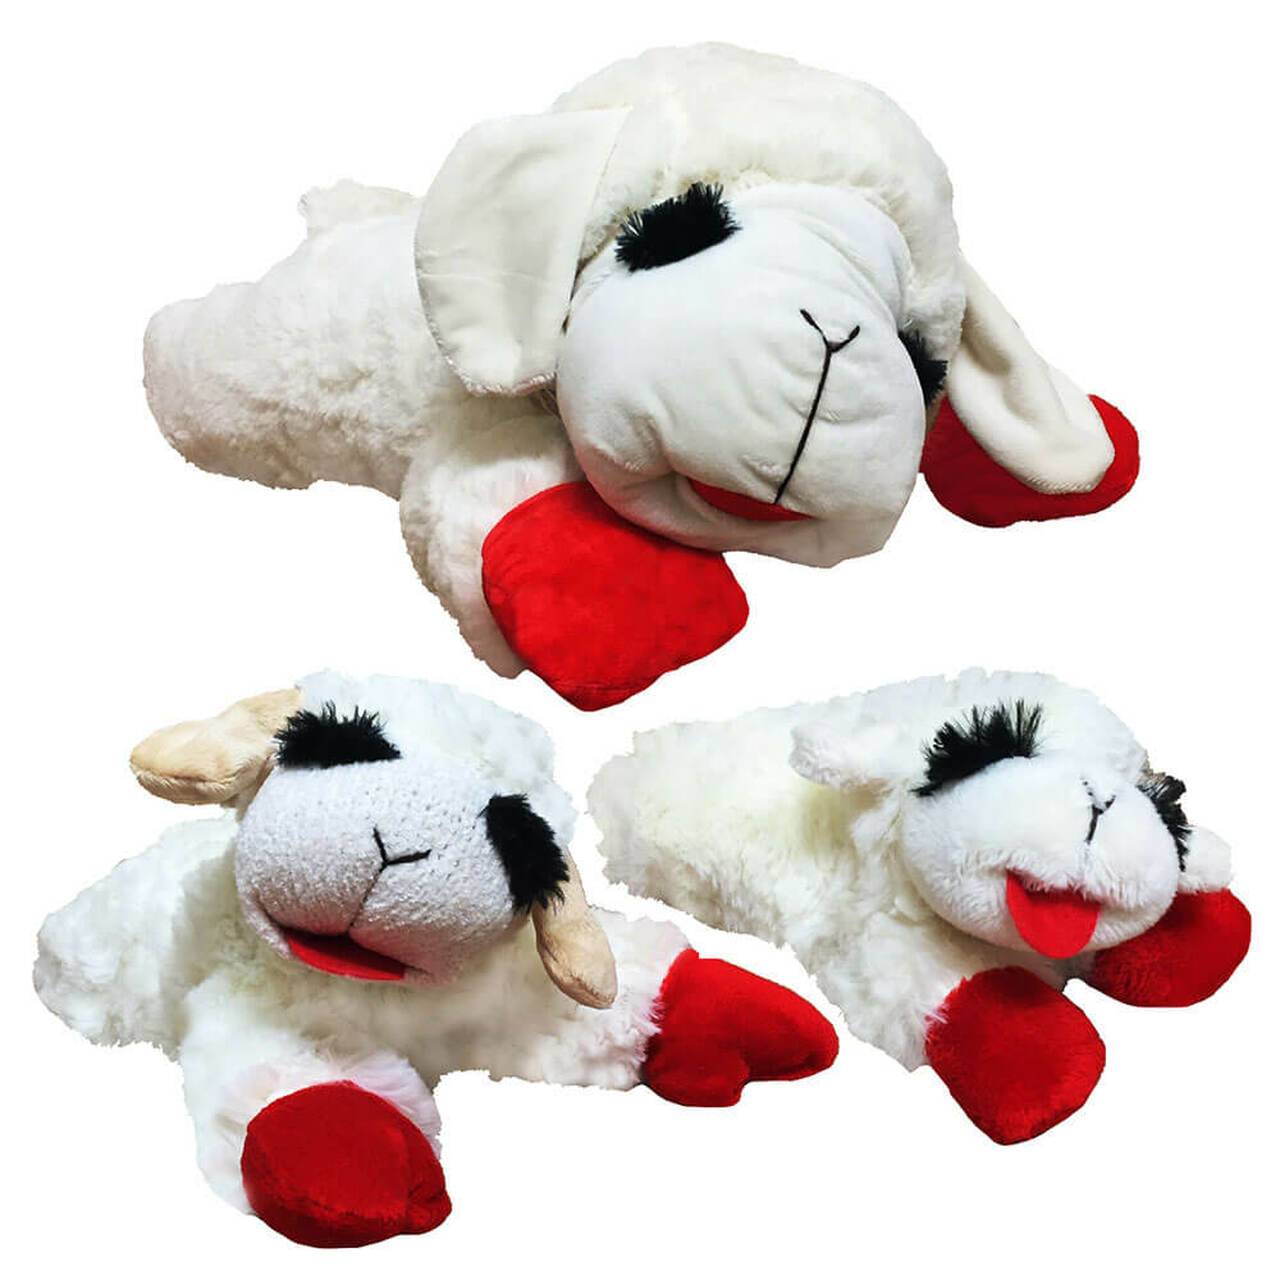  Best-Toys-for-Shih-Tzu-Puppies-Multipet-Plush-Dog-Toy-Lambchop